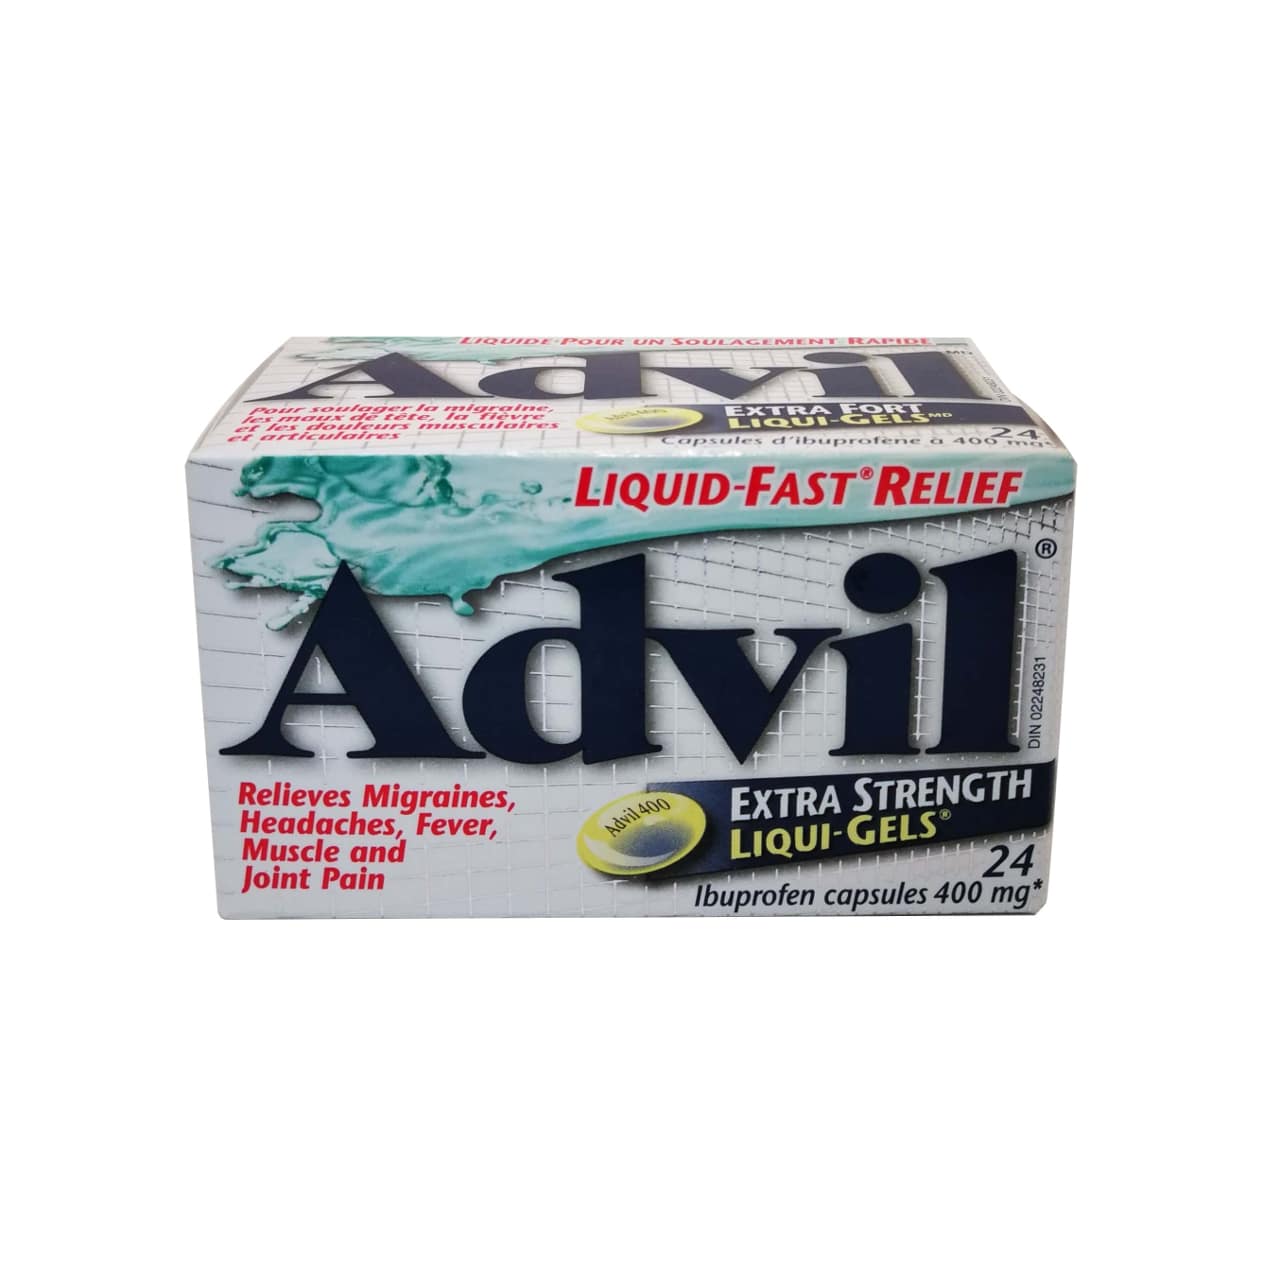 Advil Extra Strength Ibuprofen 400mg gel caps 24 pack English label